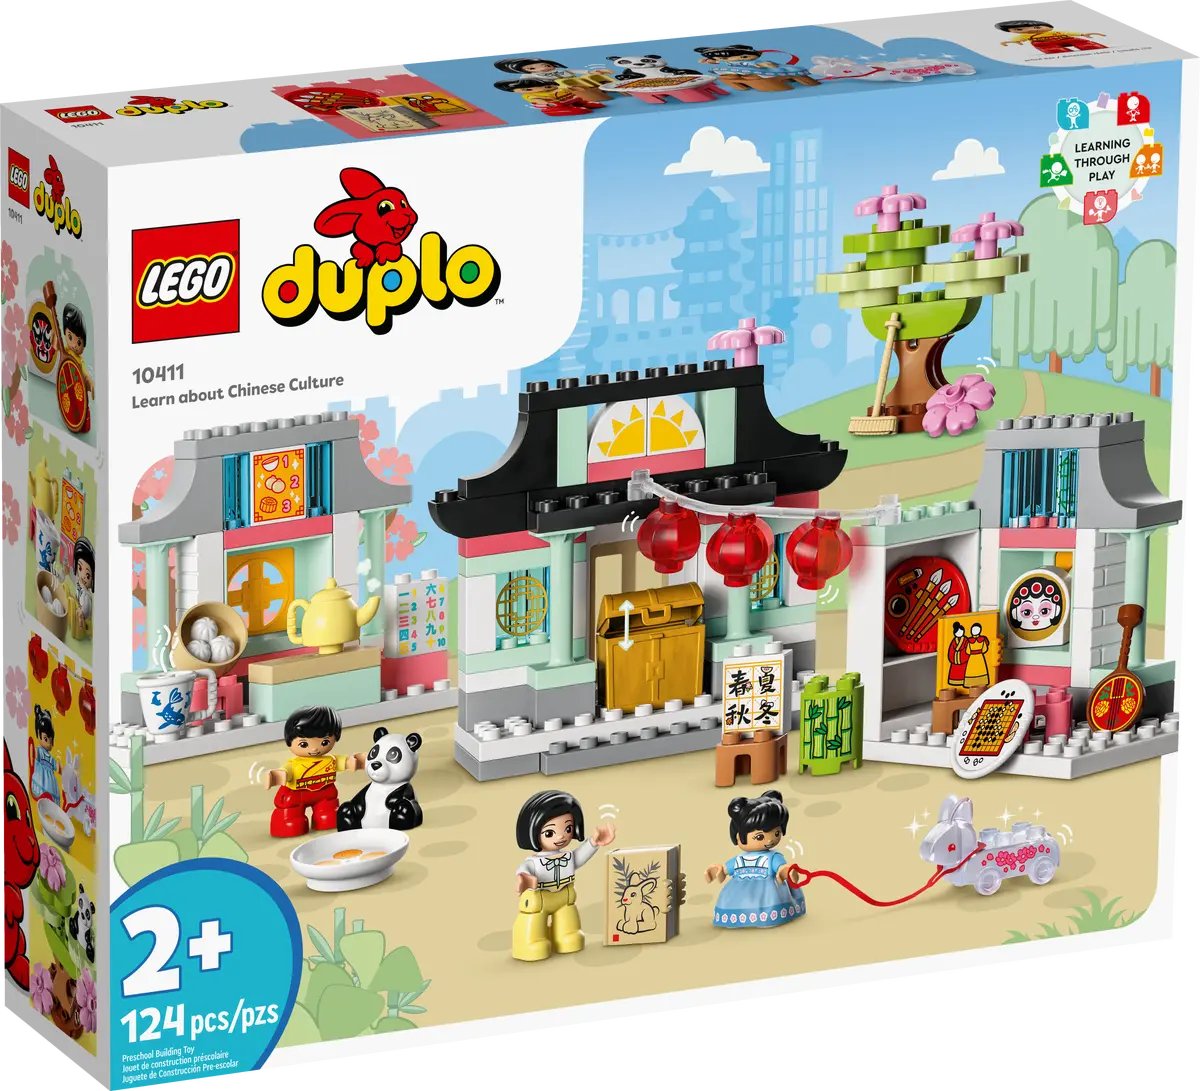 Конструктор Lego Duplo Learn About Chinese Culture 10411, 124 детали конструктор lego duplo кафе